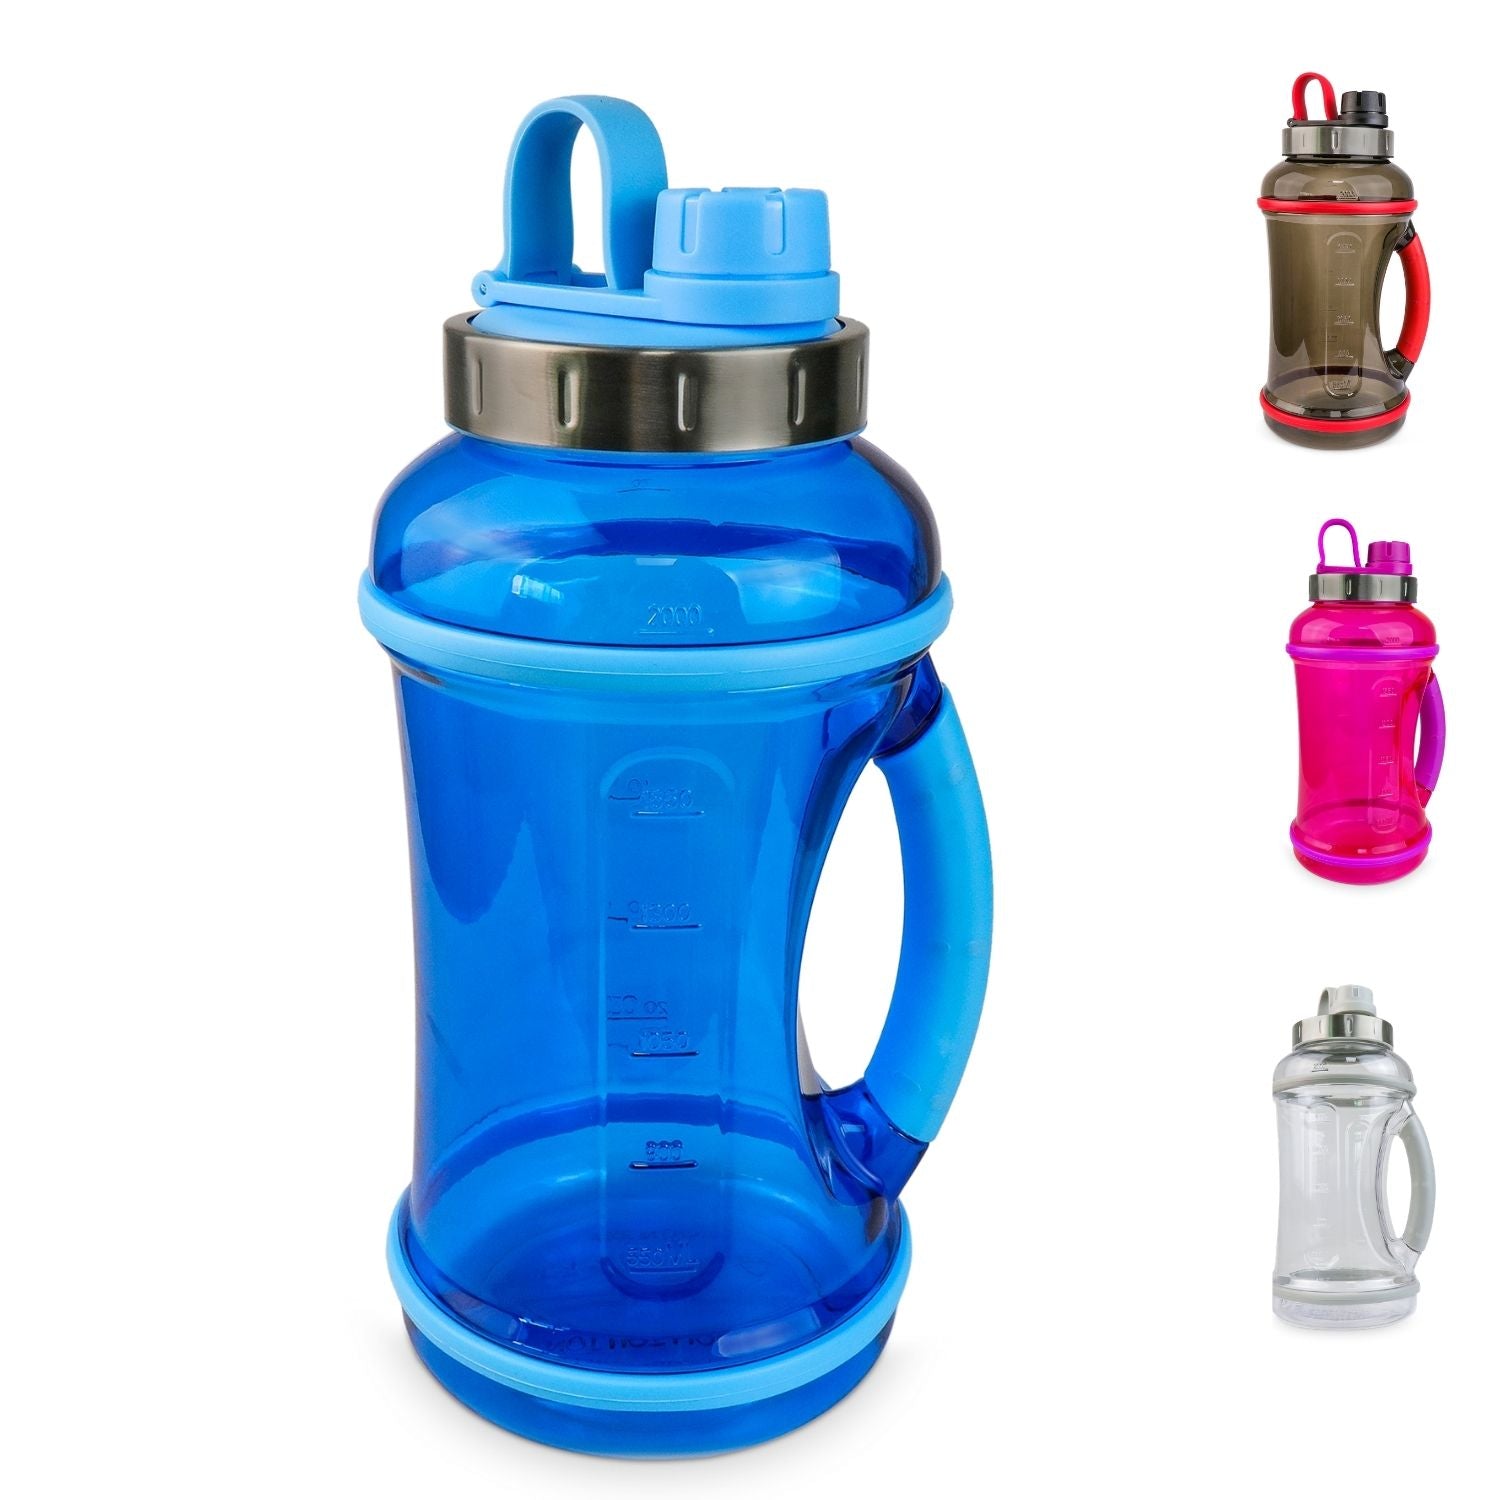 🚨New Water Bottle Alert🚨 check out my Wild Splash water bottle